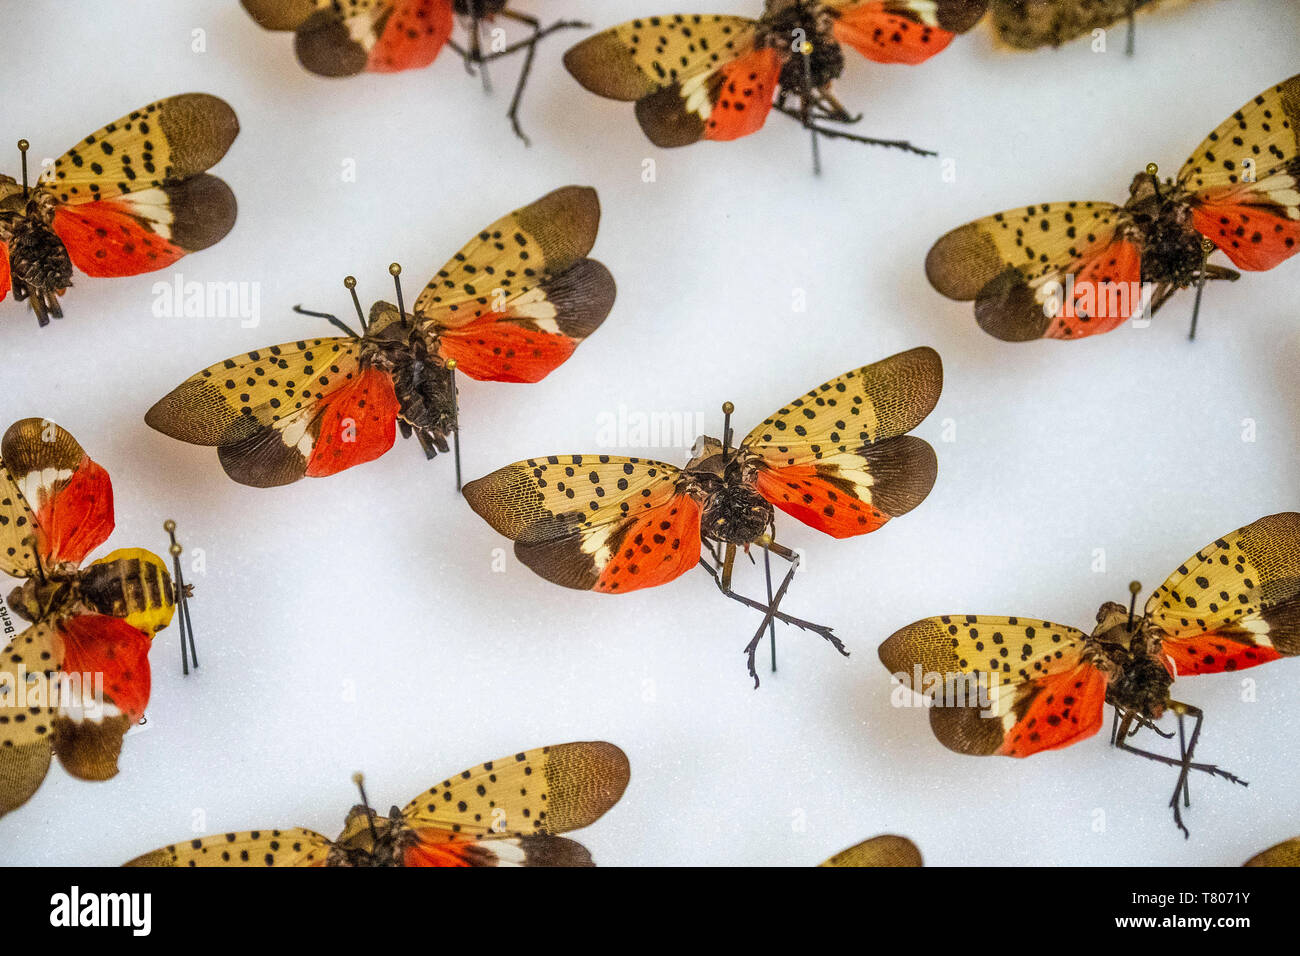 Avvistato Lanternflies Foto Stock